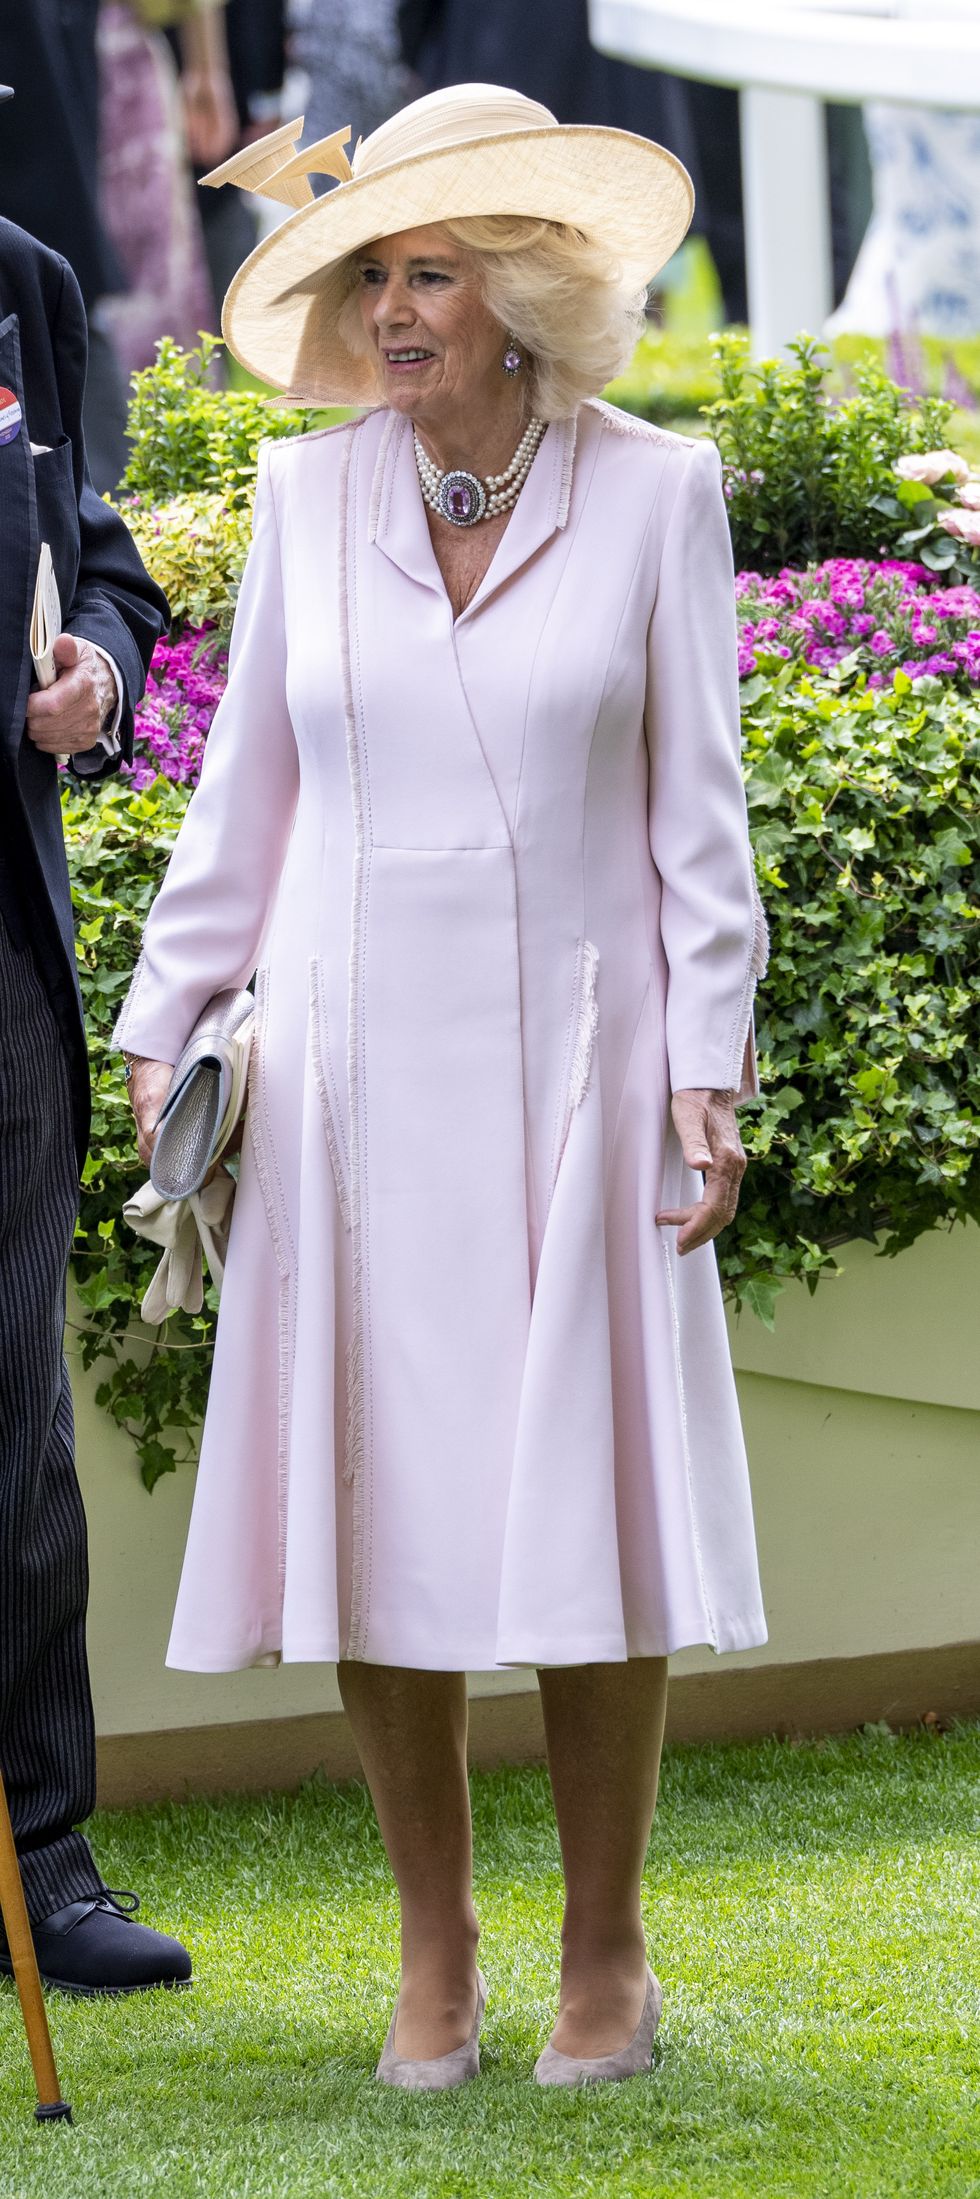 Duchess of Edinburgh looks chic in a white dress at Royal Ascot